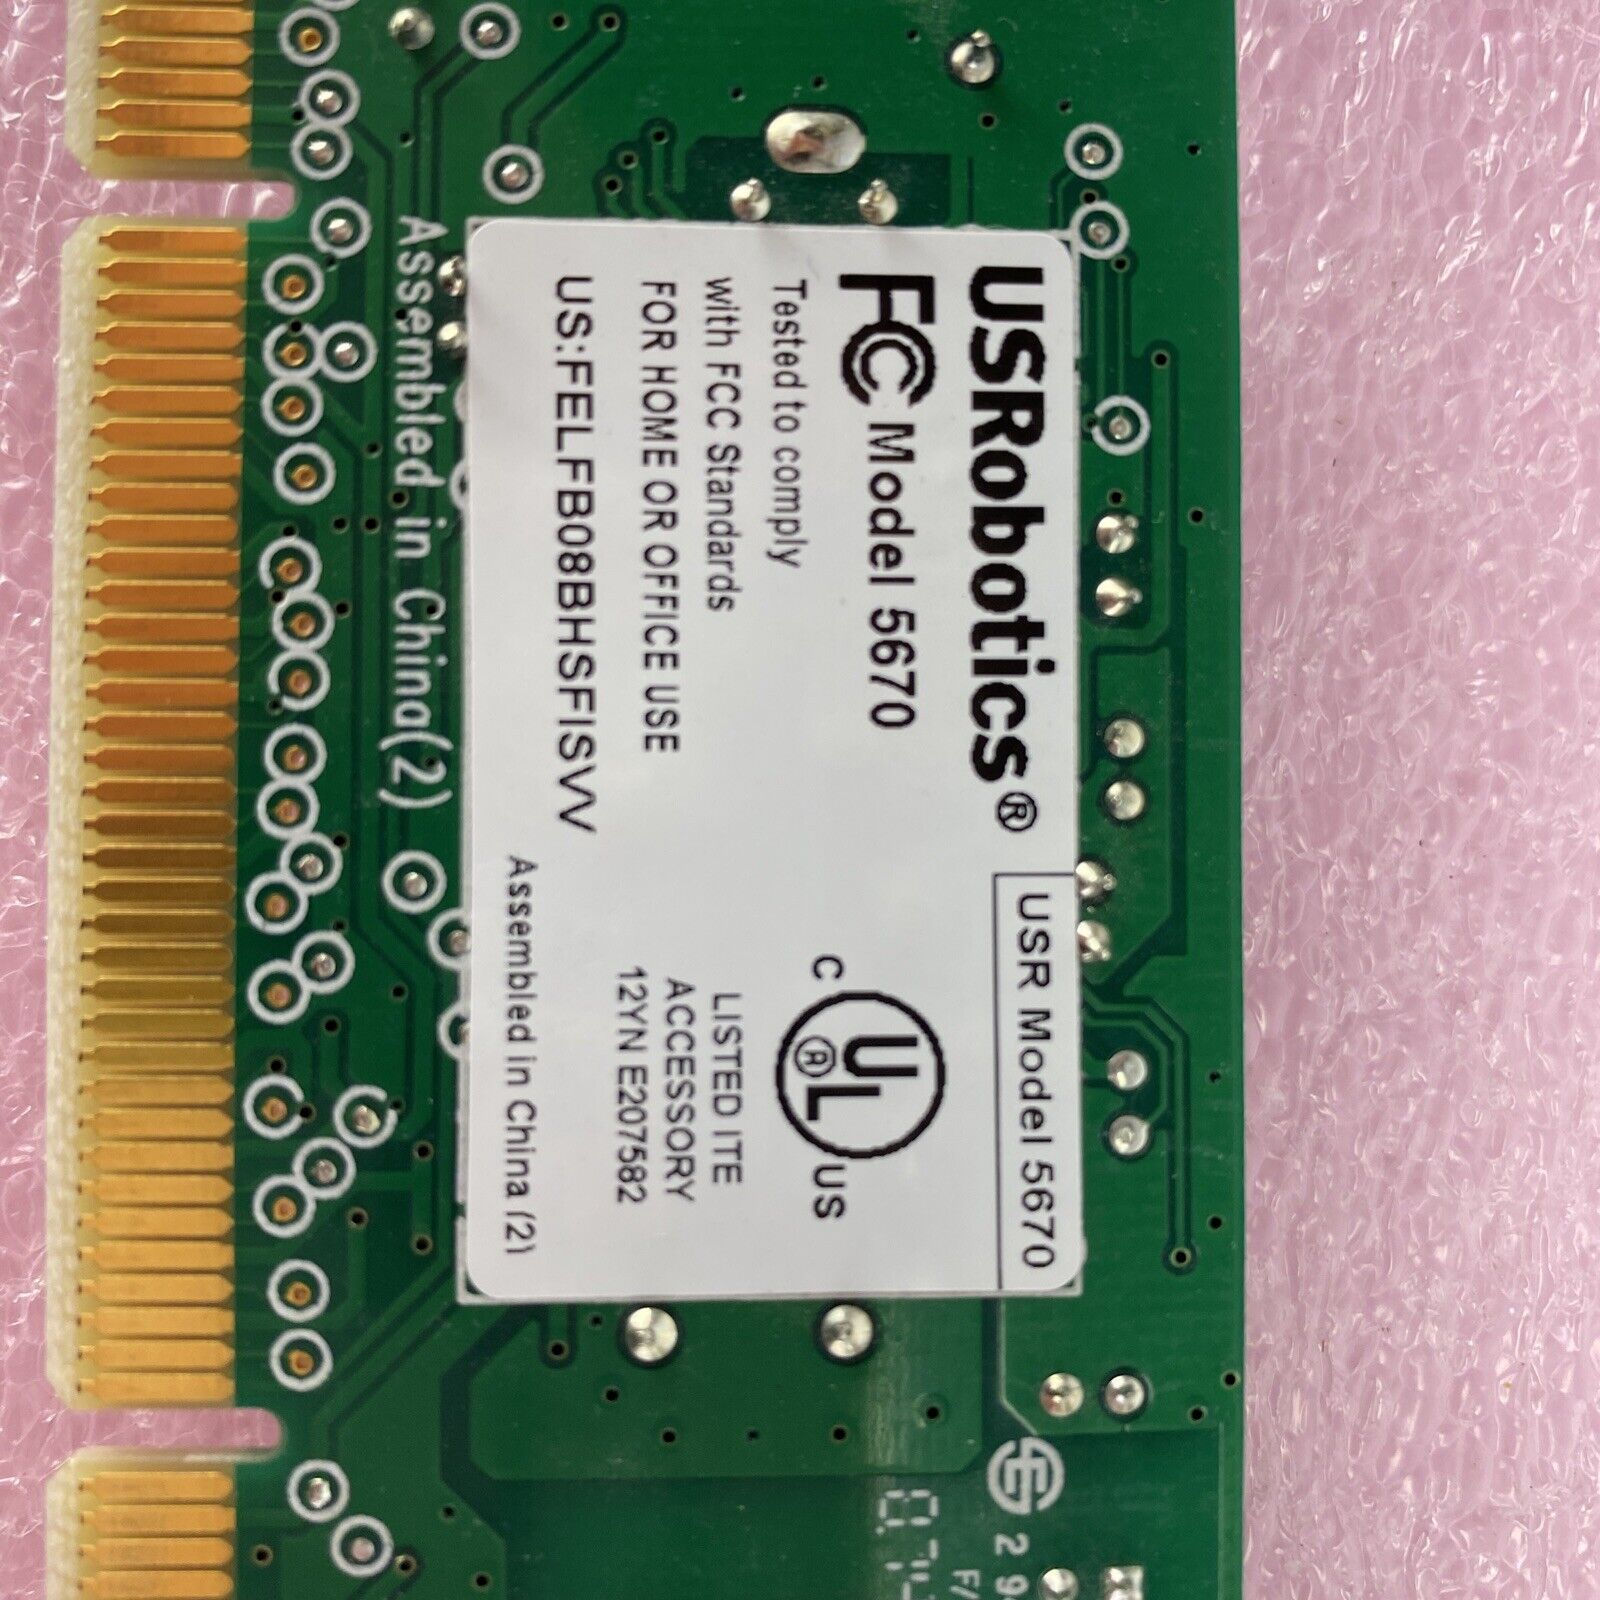 USRobotics USR5670 PCI Card